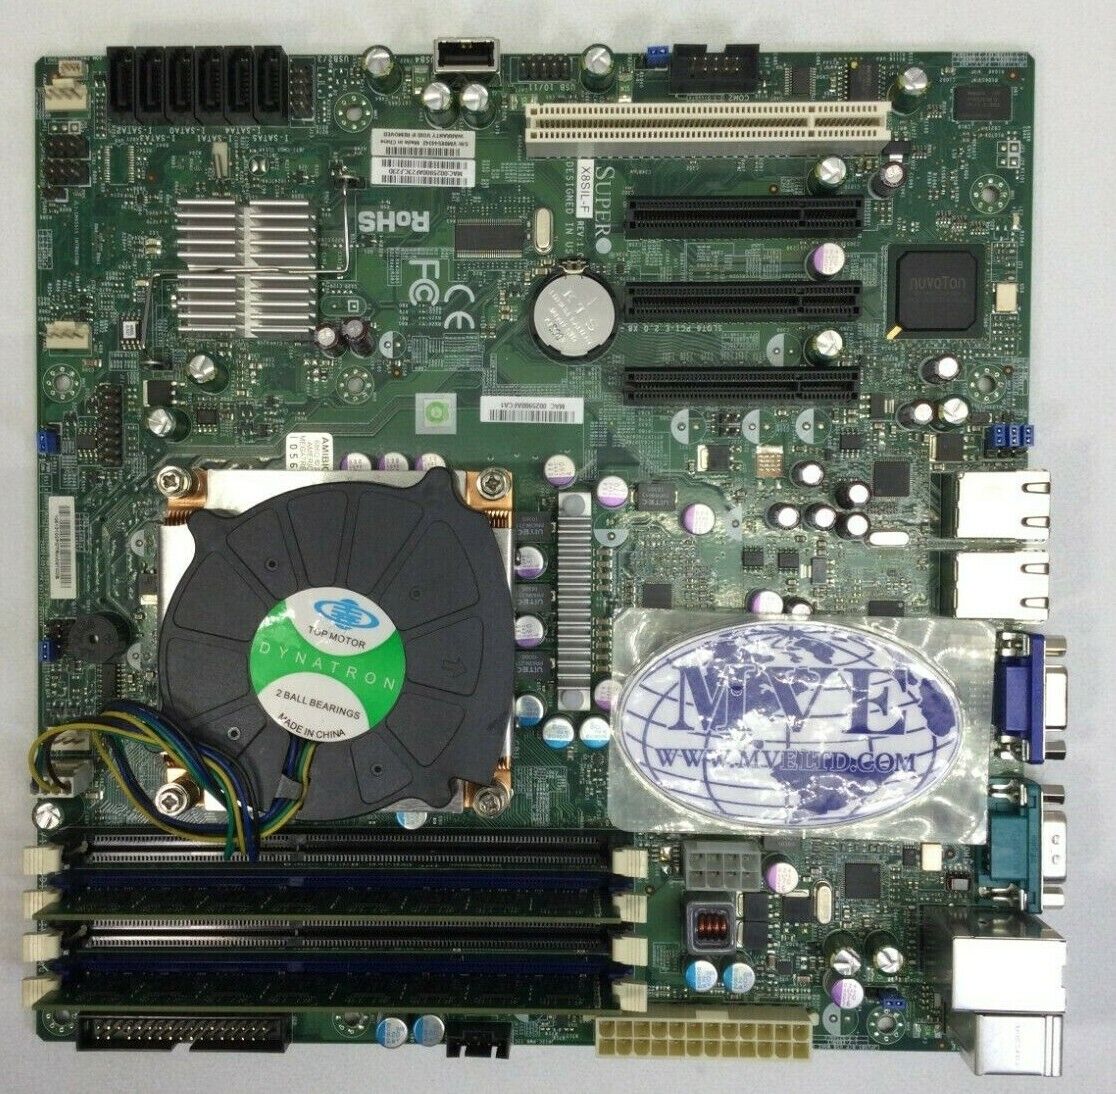 SUPERMICRO X8SIL-F 2x-2GB RAM INTEL X3440 DYNATRON HEATSINK SERVER MOTHERBOARD